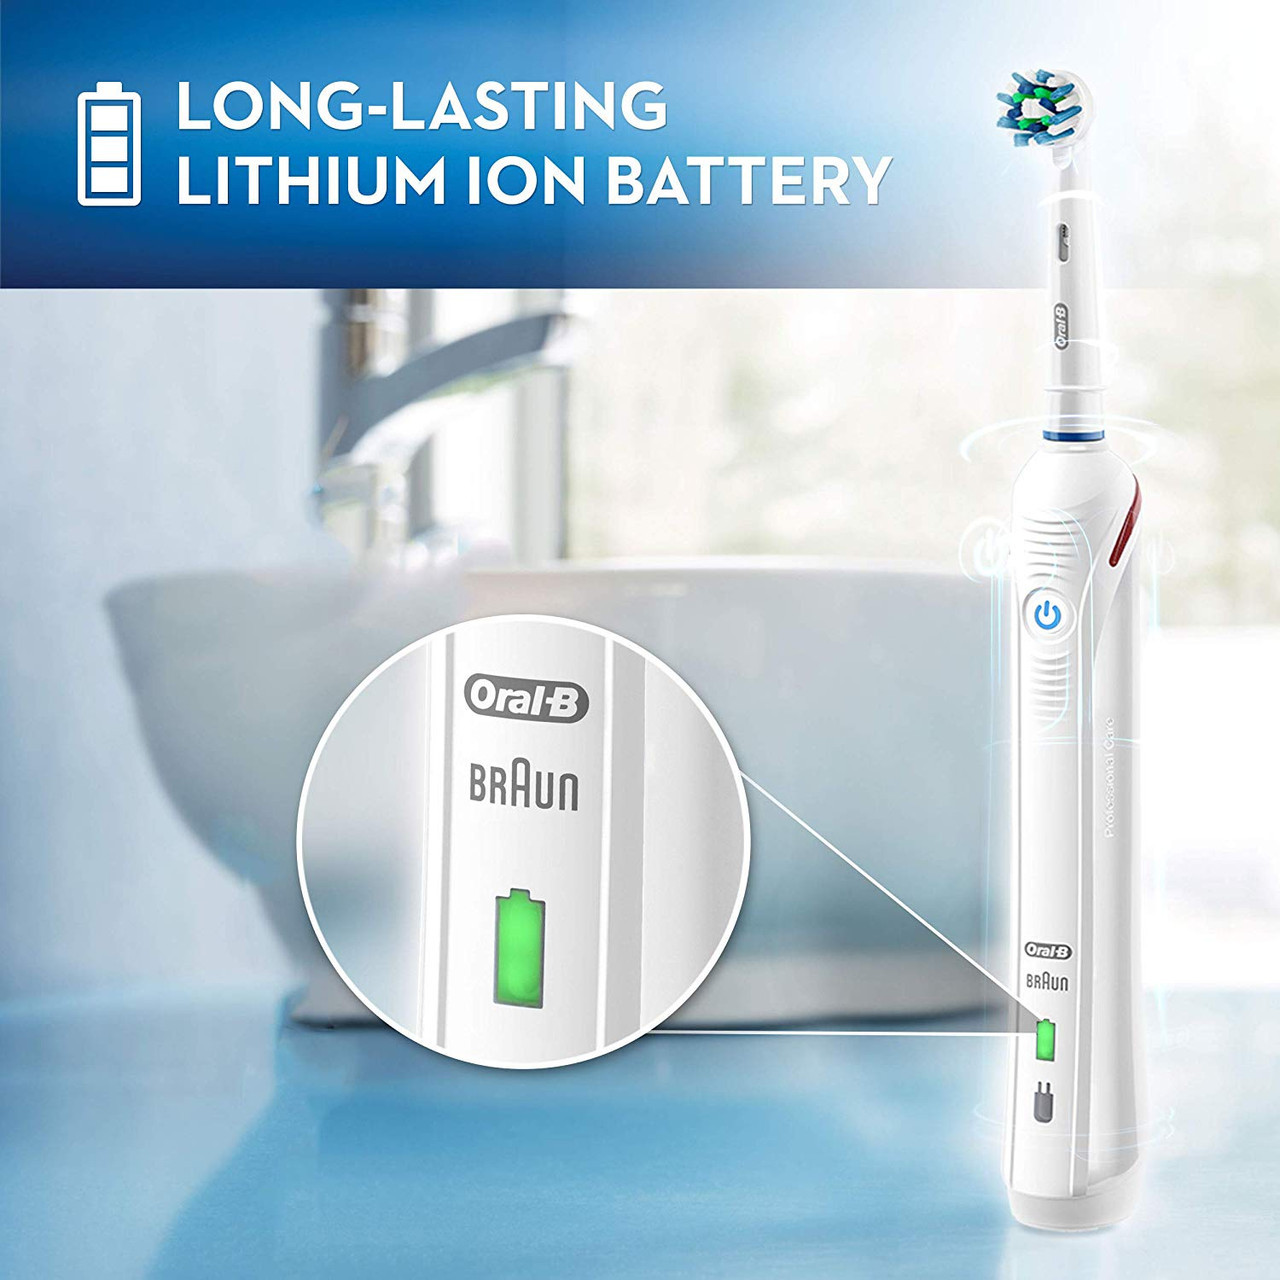 Oral-B Smart 1500 Electric Toothbrush 3/pk Blue